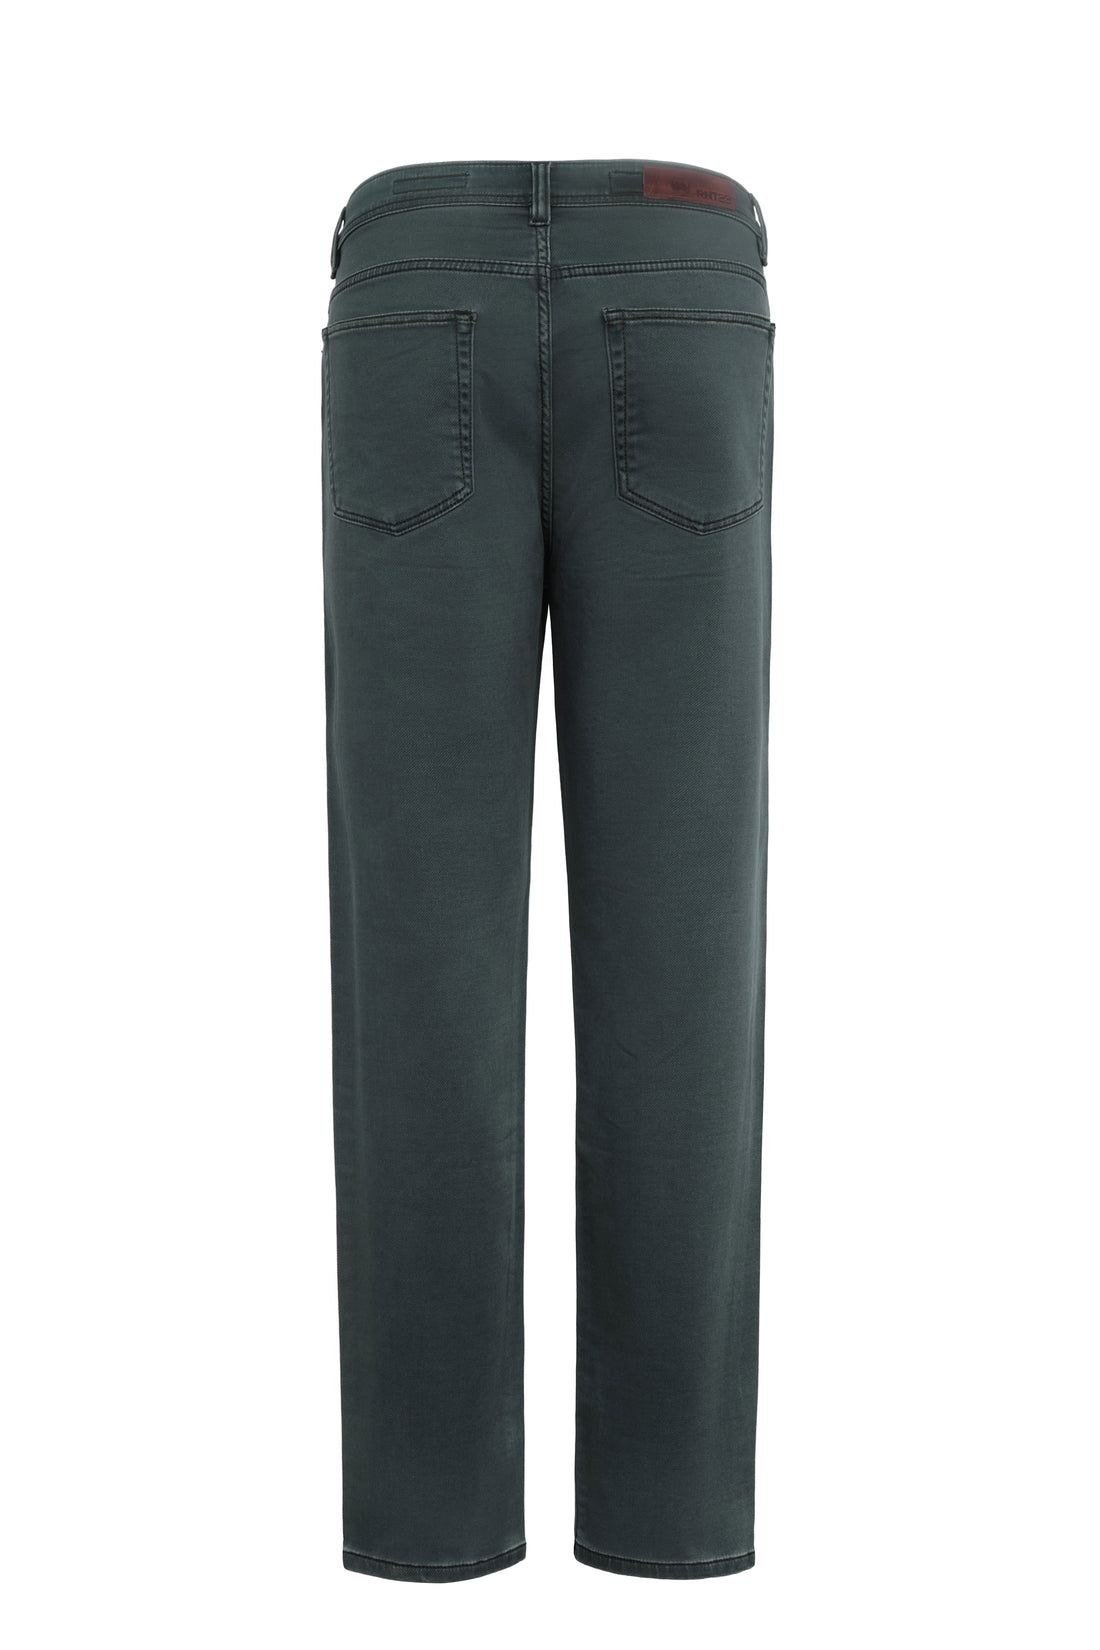 Super Soft 5-pocket Style Pants - Khaki